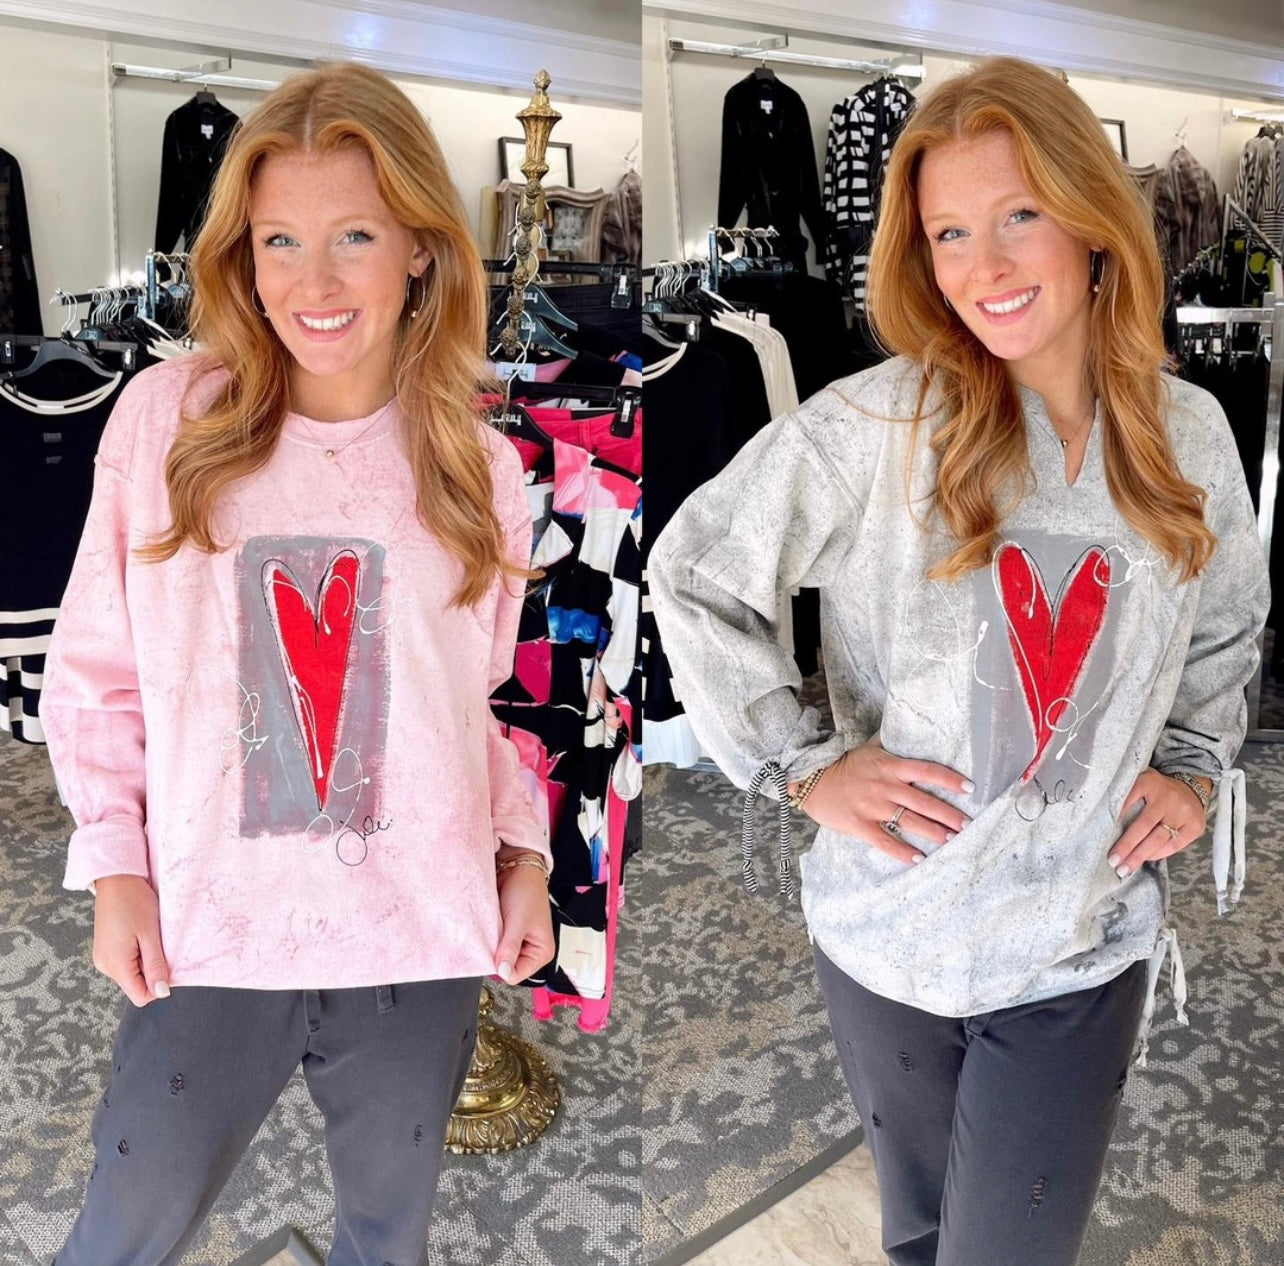 Kunky's Heart Sweatshirt-Sweatshirt-Kunky's-The Village Shoppe, Women’s Fashion Boutique, Shop Online and In Store - Located in Muscle Shoals, AL.